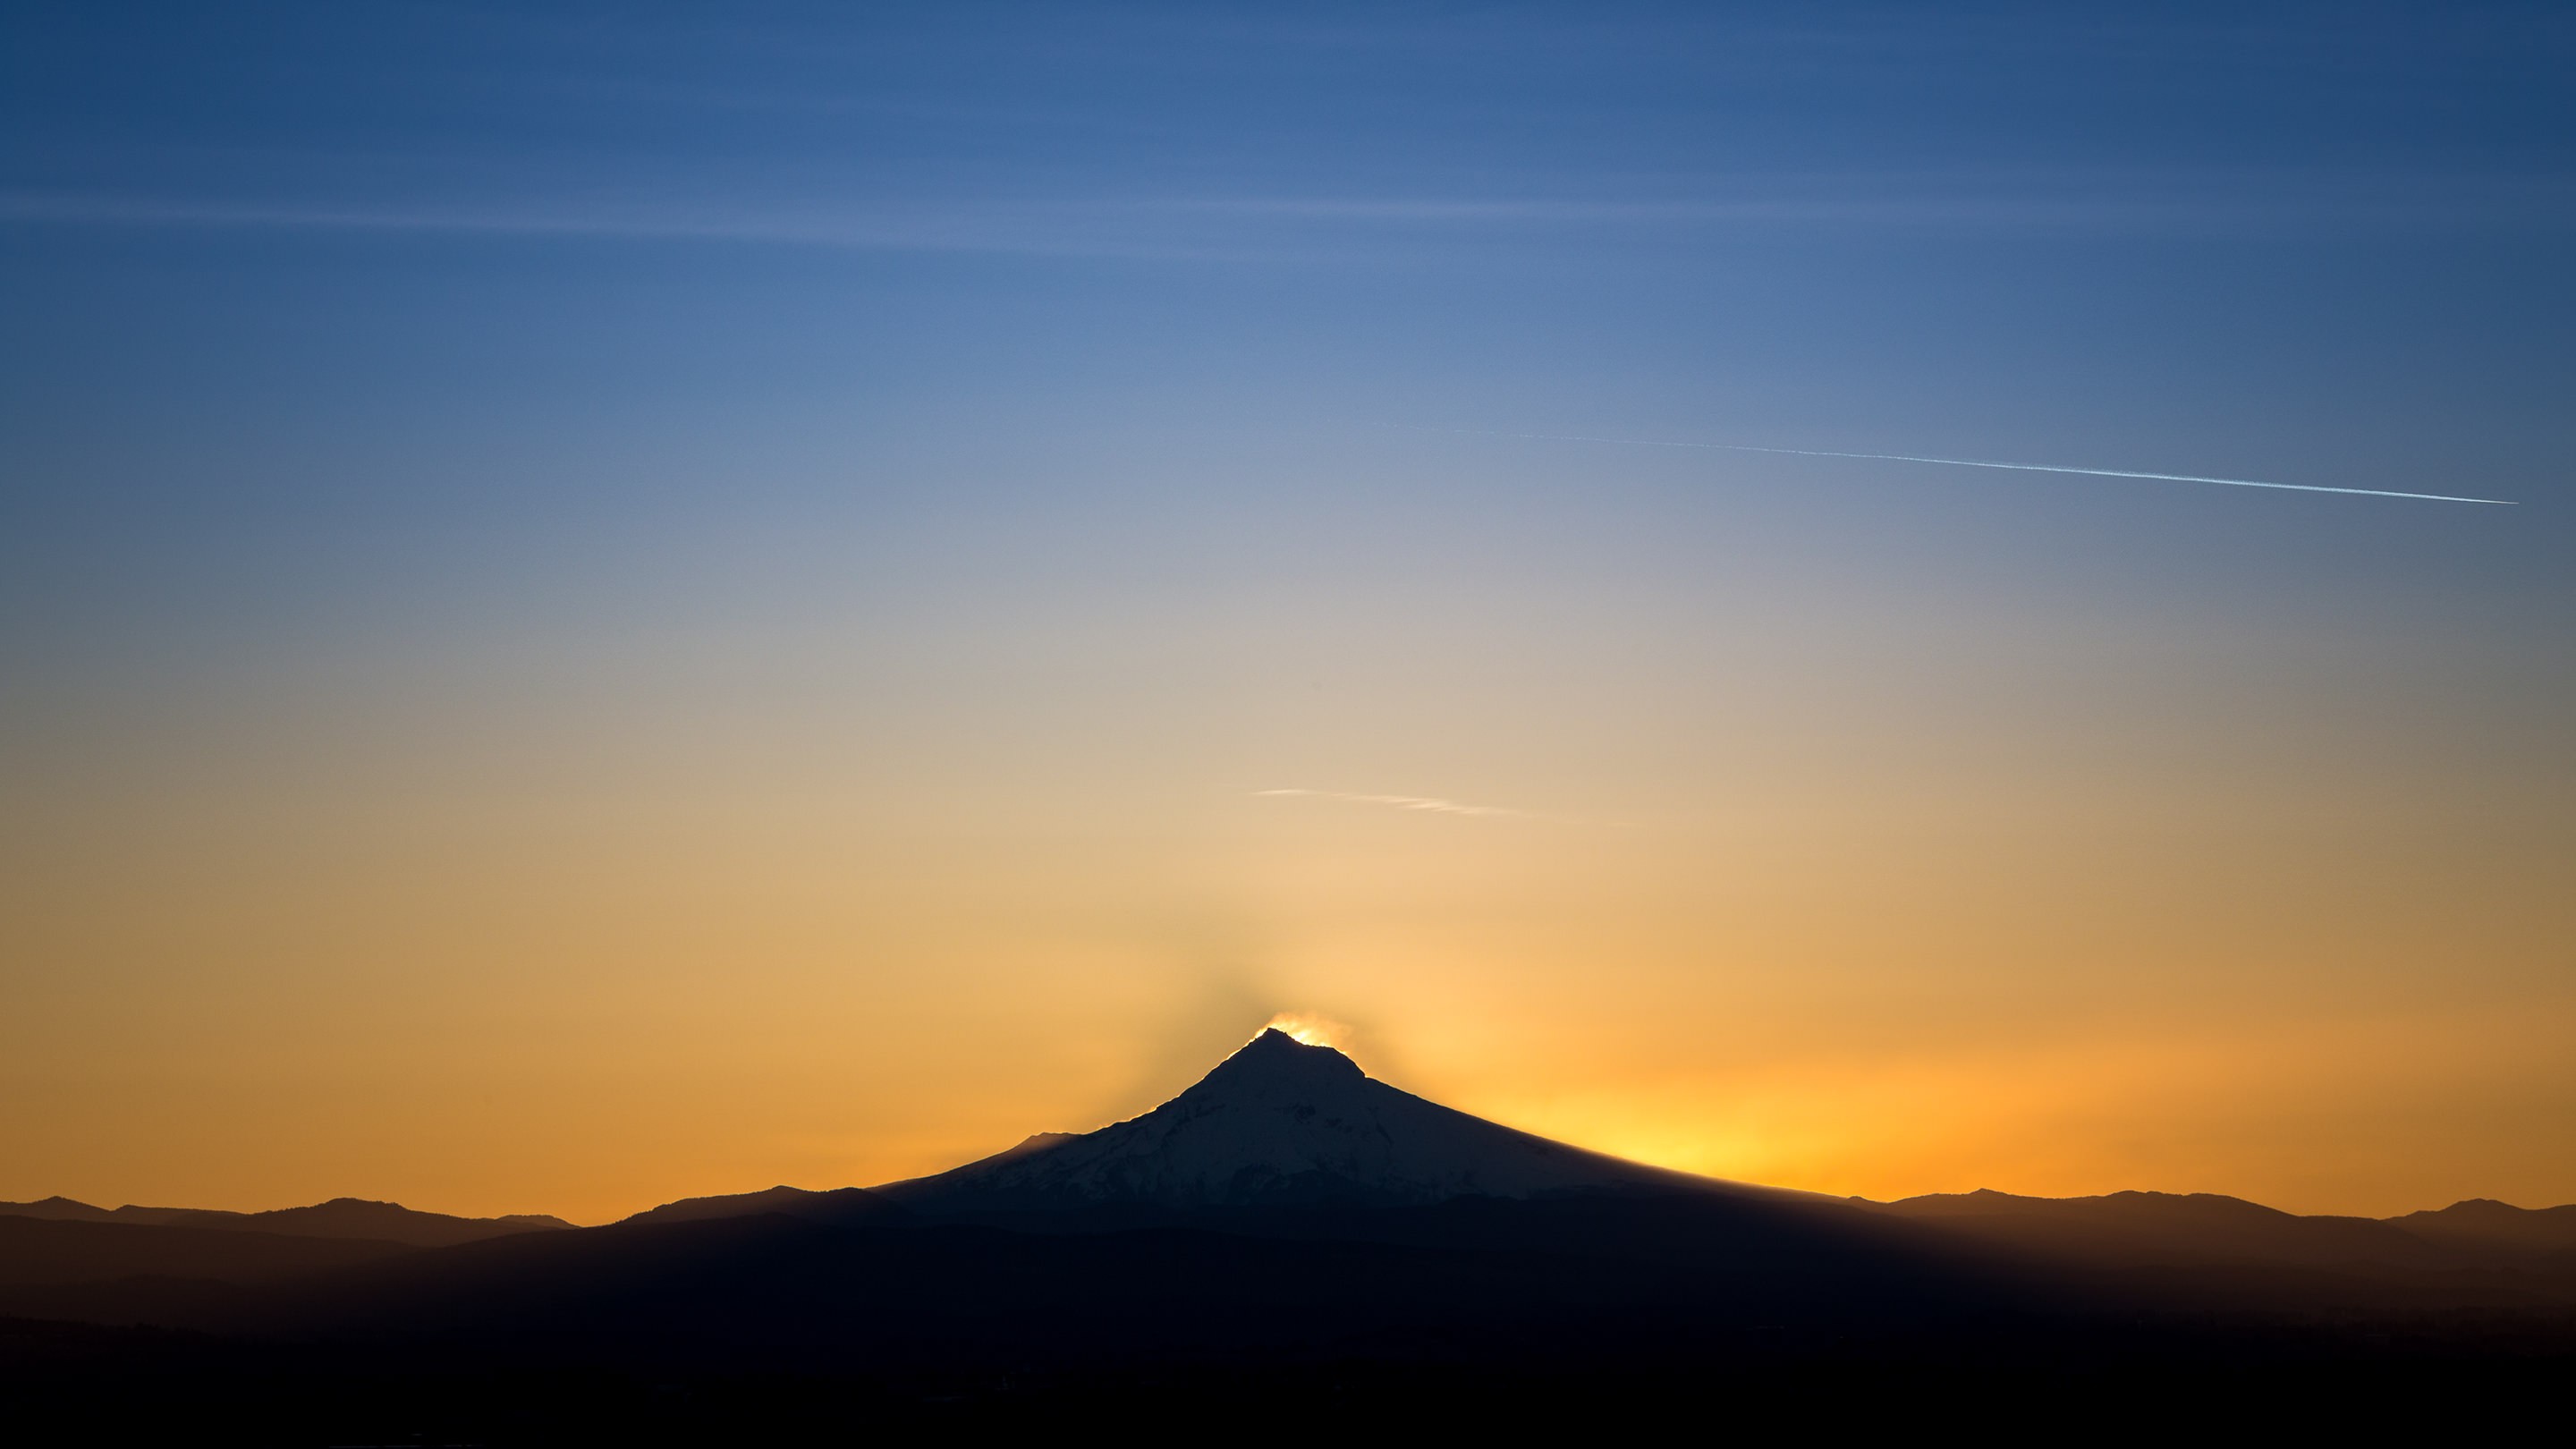 General 2880x1620 nature mountains Mount Hood Oregon USA dark sunlight sky landscape